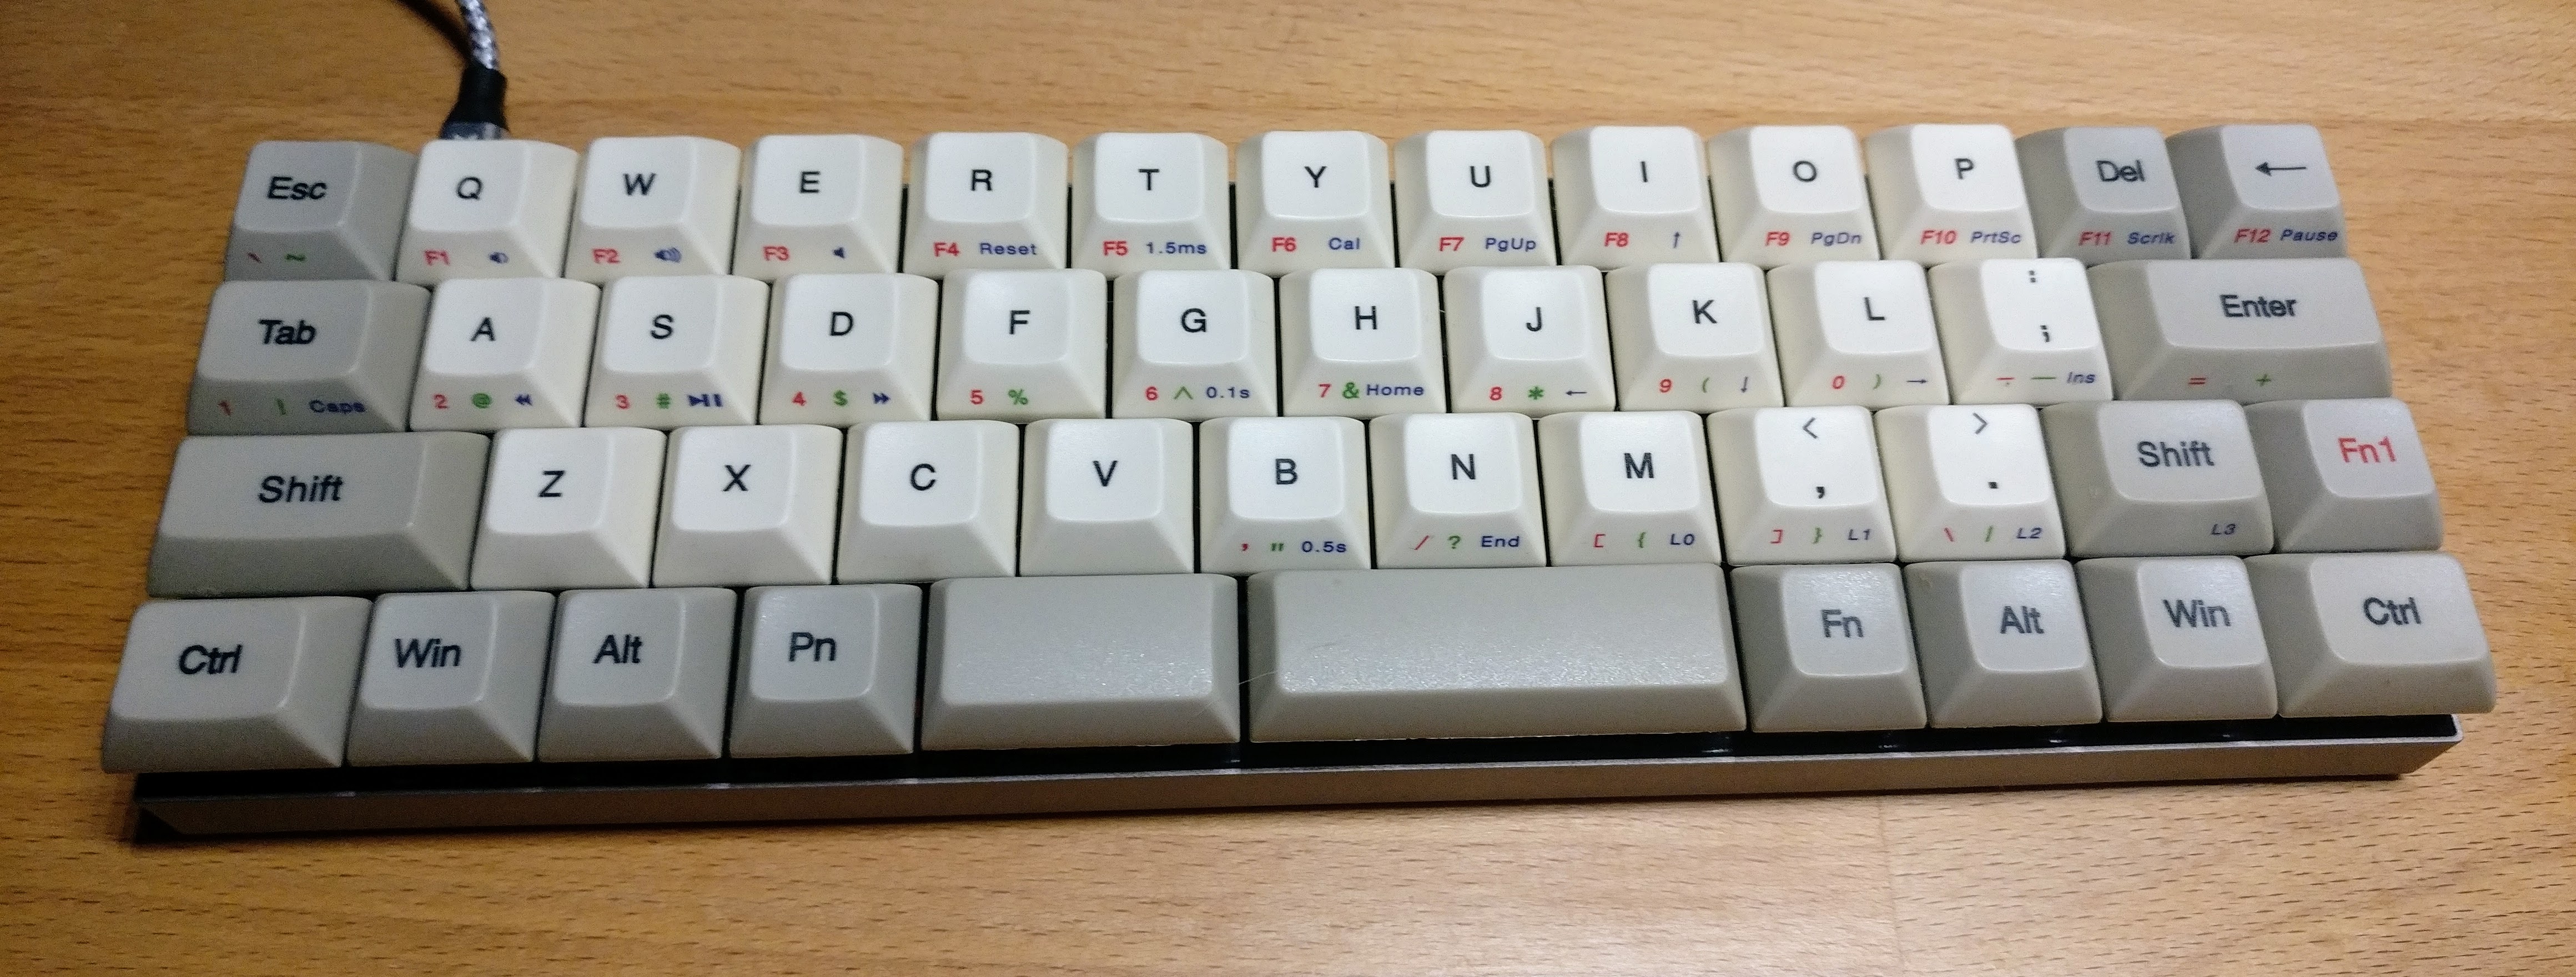 Vortex Core Keyboard Review